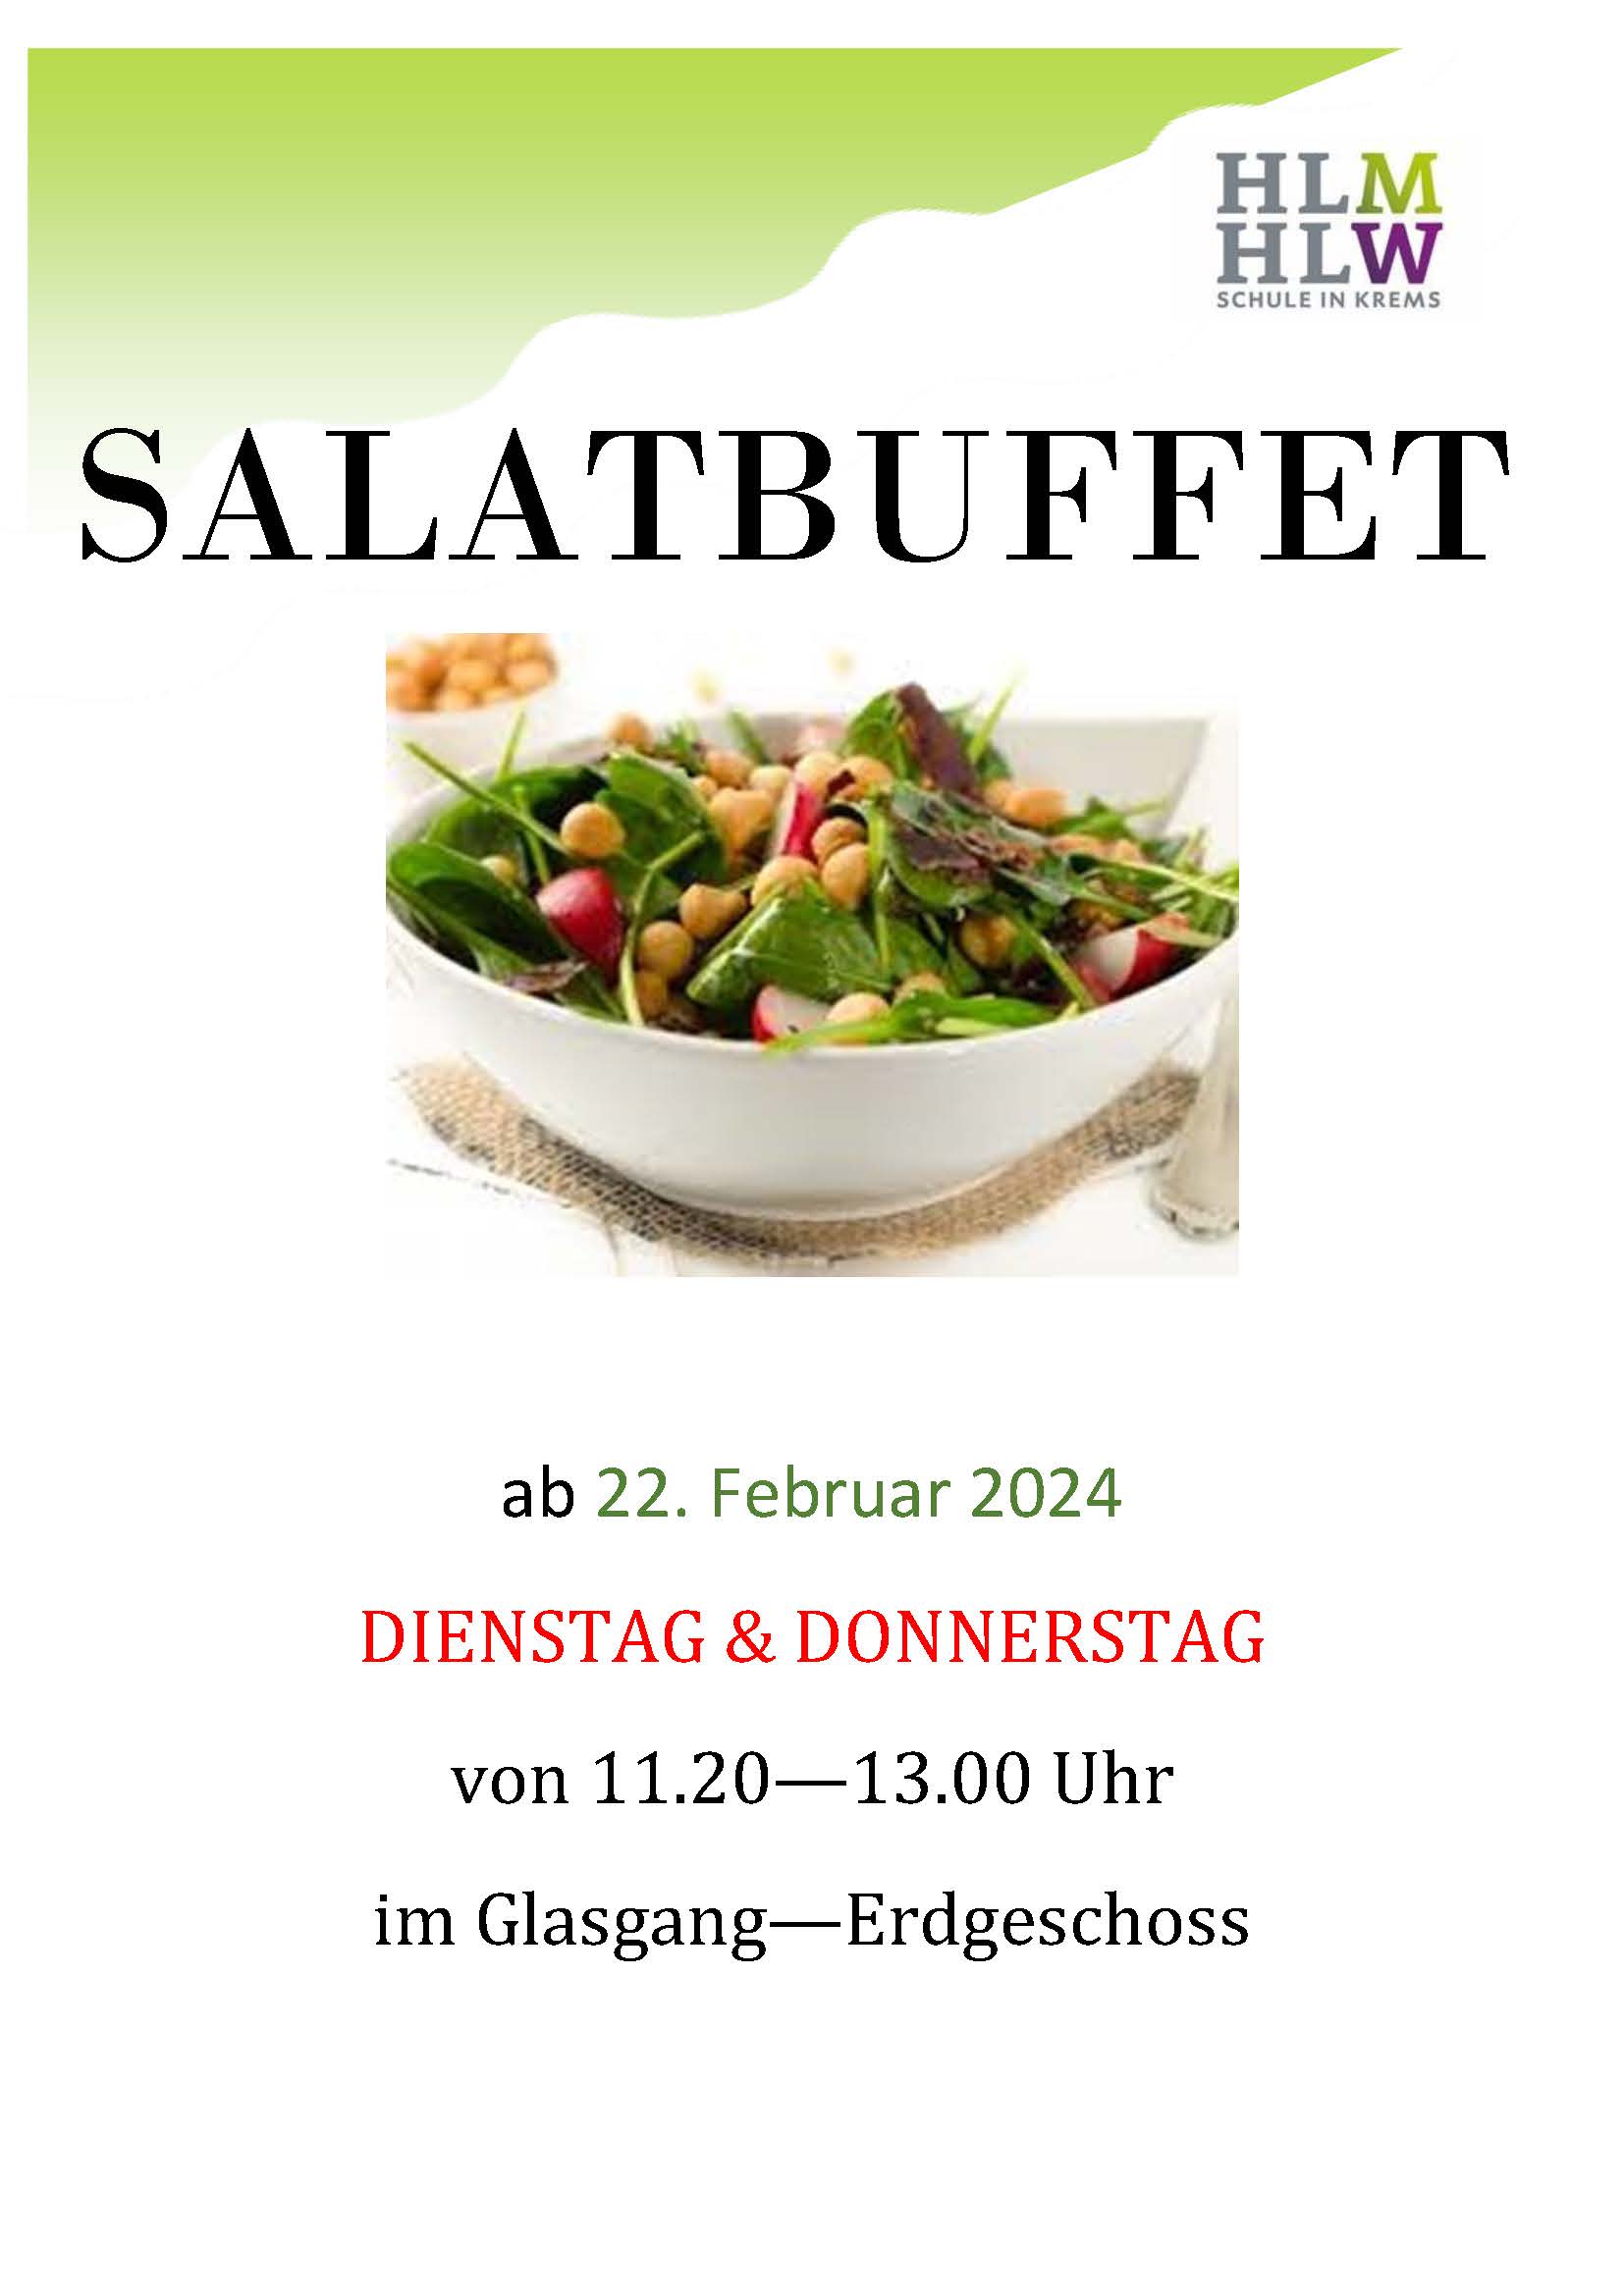 Salatbuffet Plakat 2 Tage